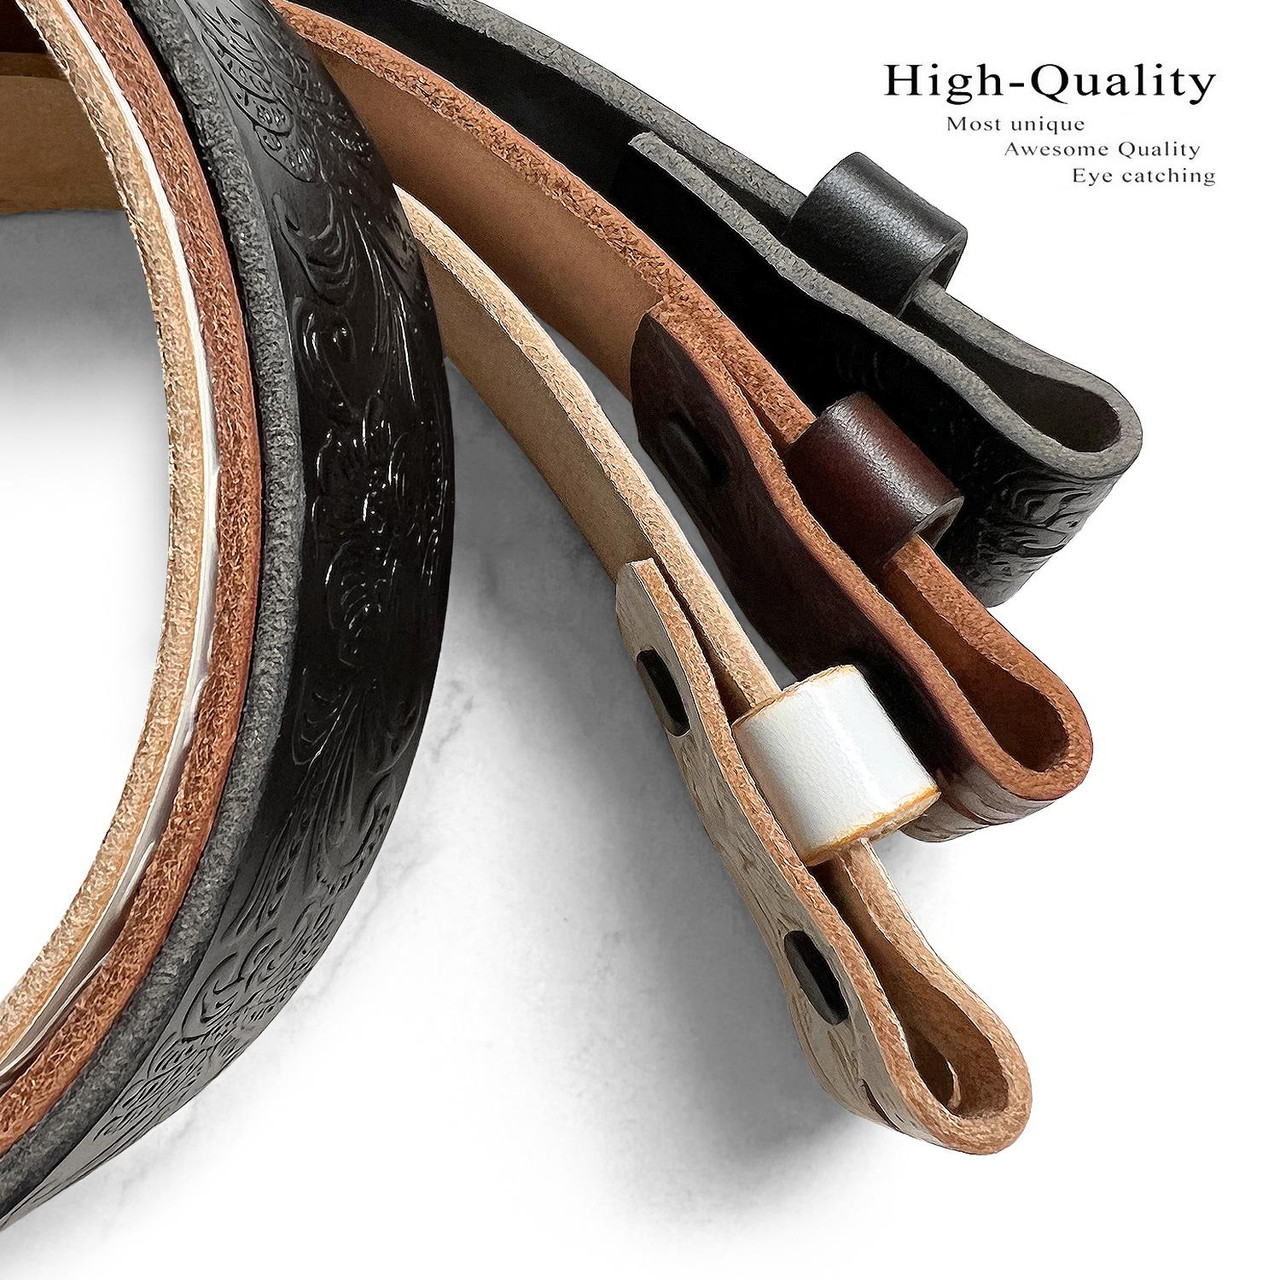 Genuine leather belt for women. Wide leather belt. Handmade.